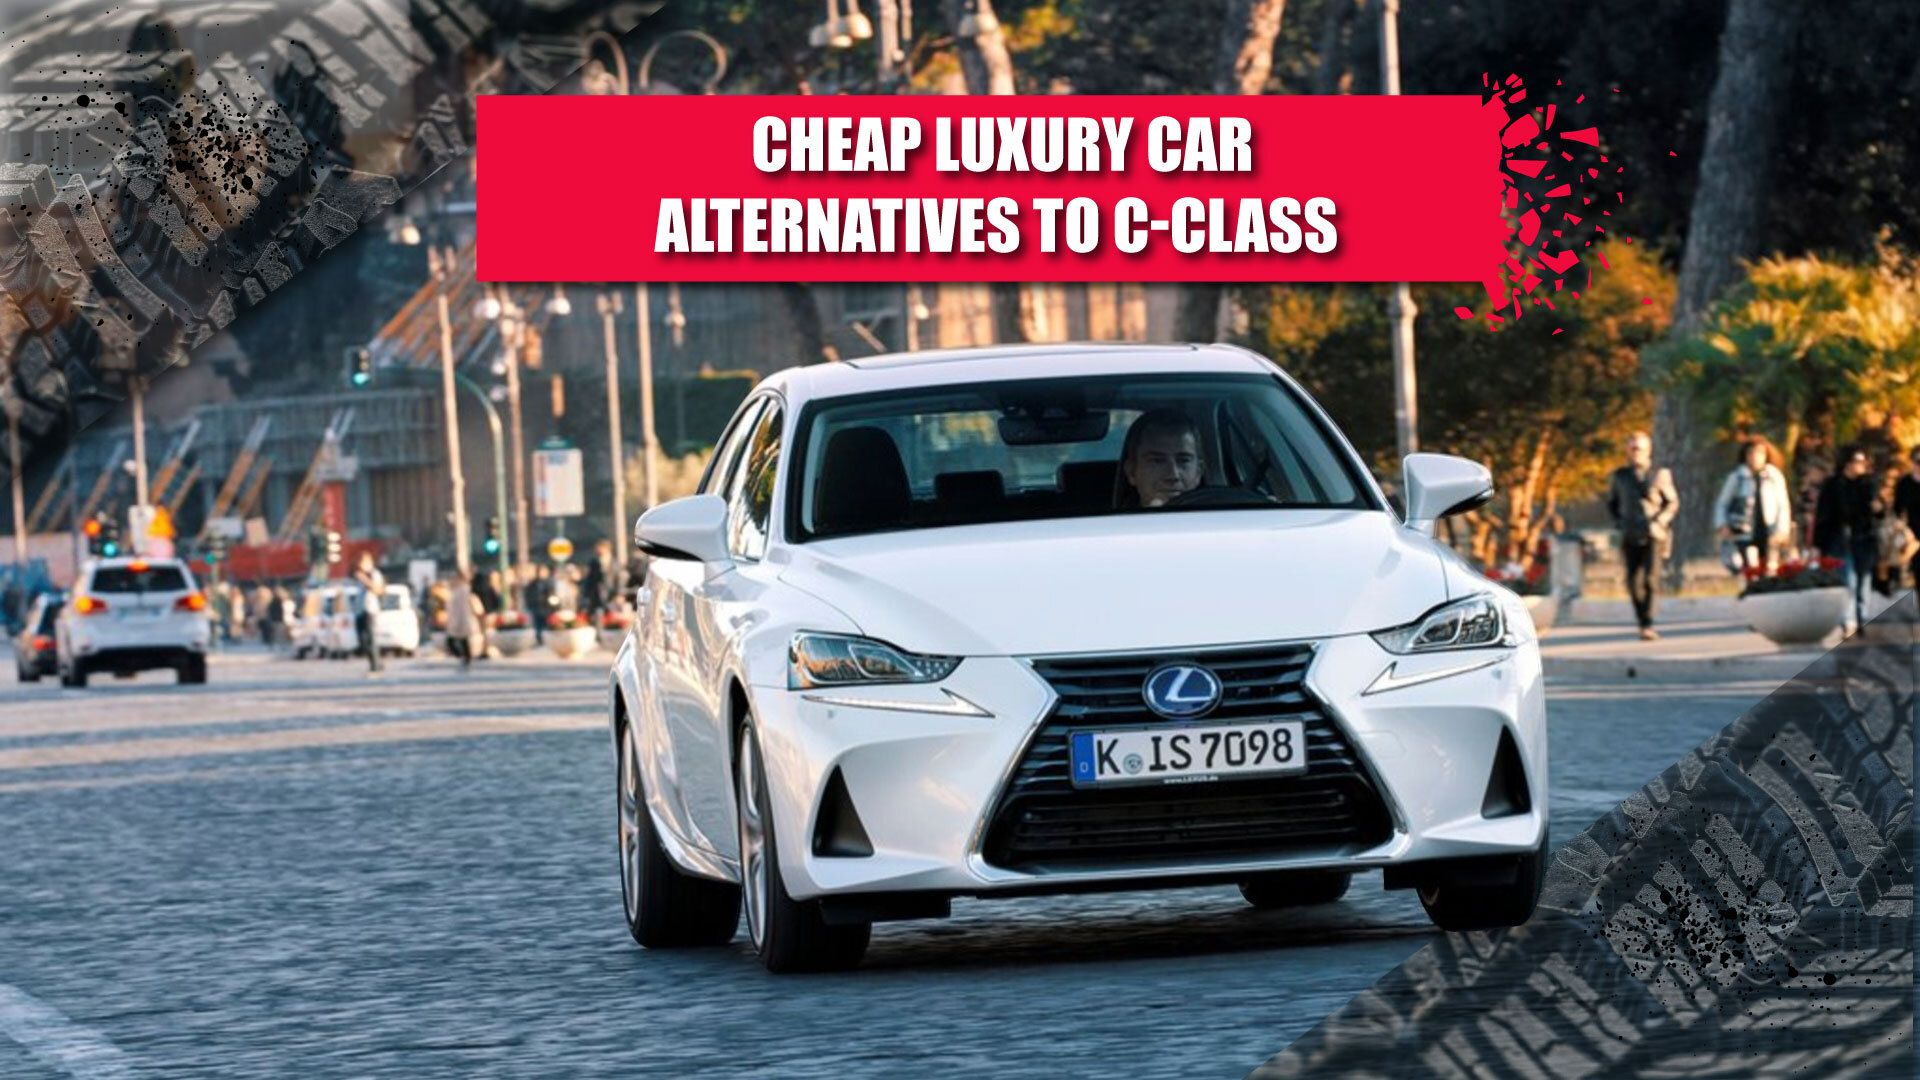 Lexus IS 350 - Luxury Car Alternatives To C-Class